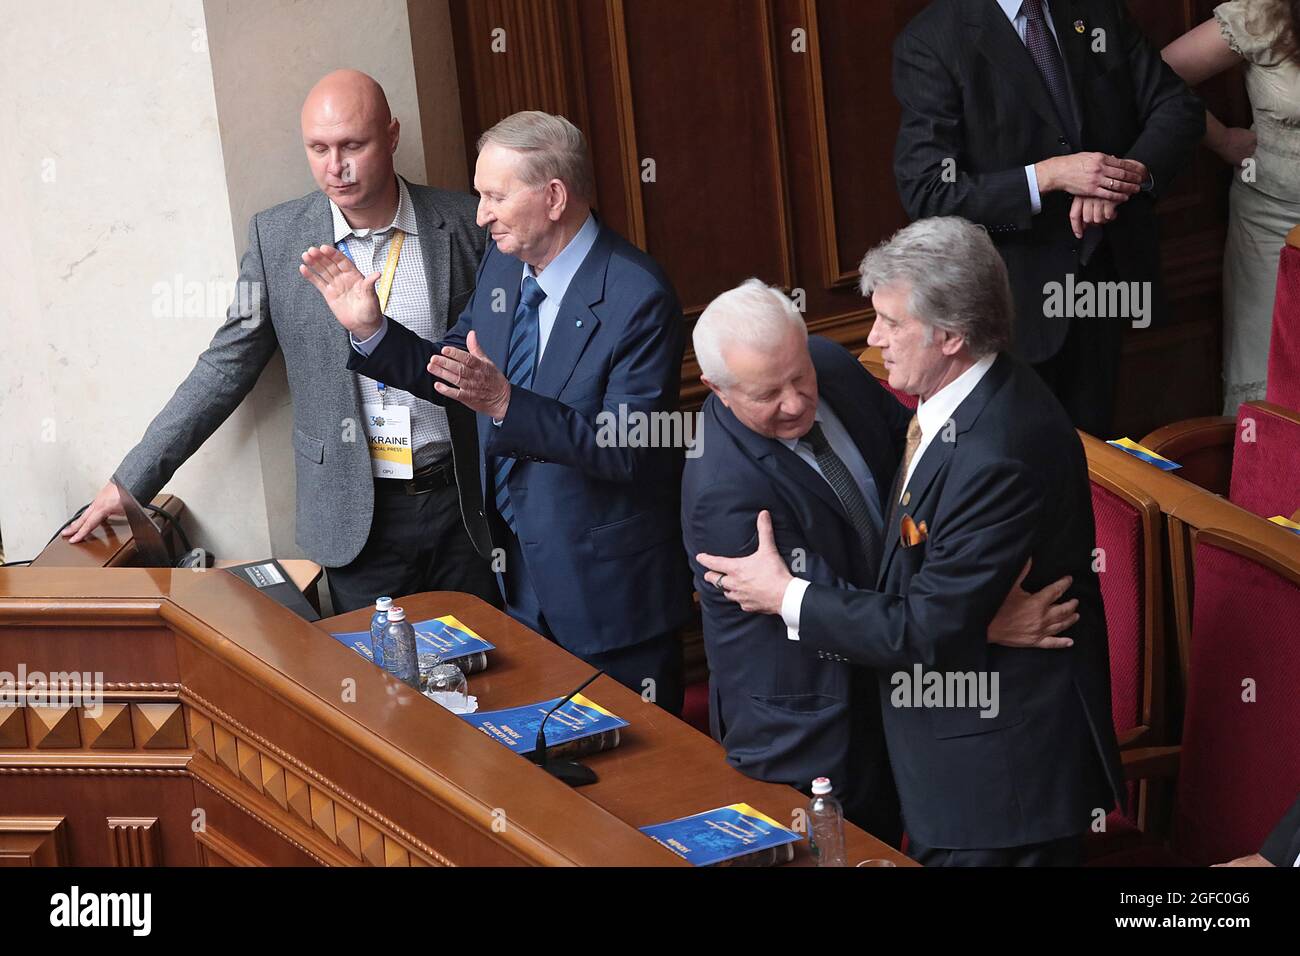 Non Exclusive: KYIV, UKRAINE - AUGUST 24, 2021 - Ex-President of Ukraine Viktor Yushchenko, former Speaker Oleksandr Moroz and ex-President of Ukraine Stock Photo